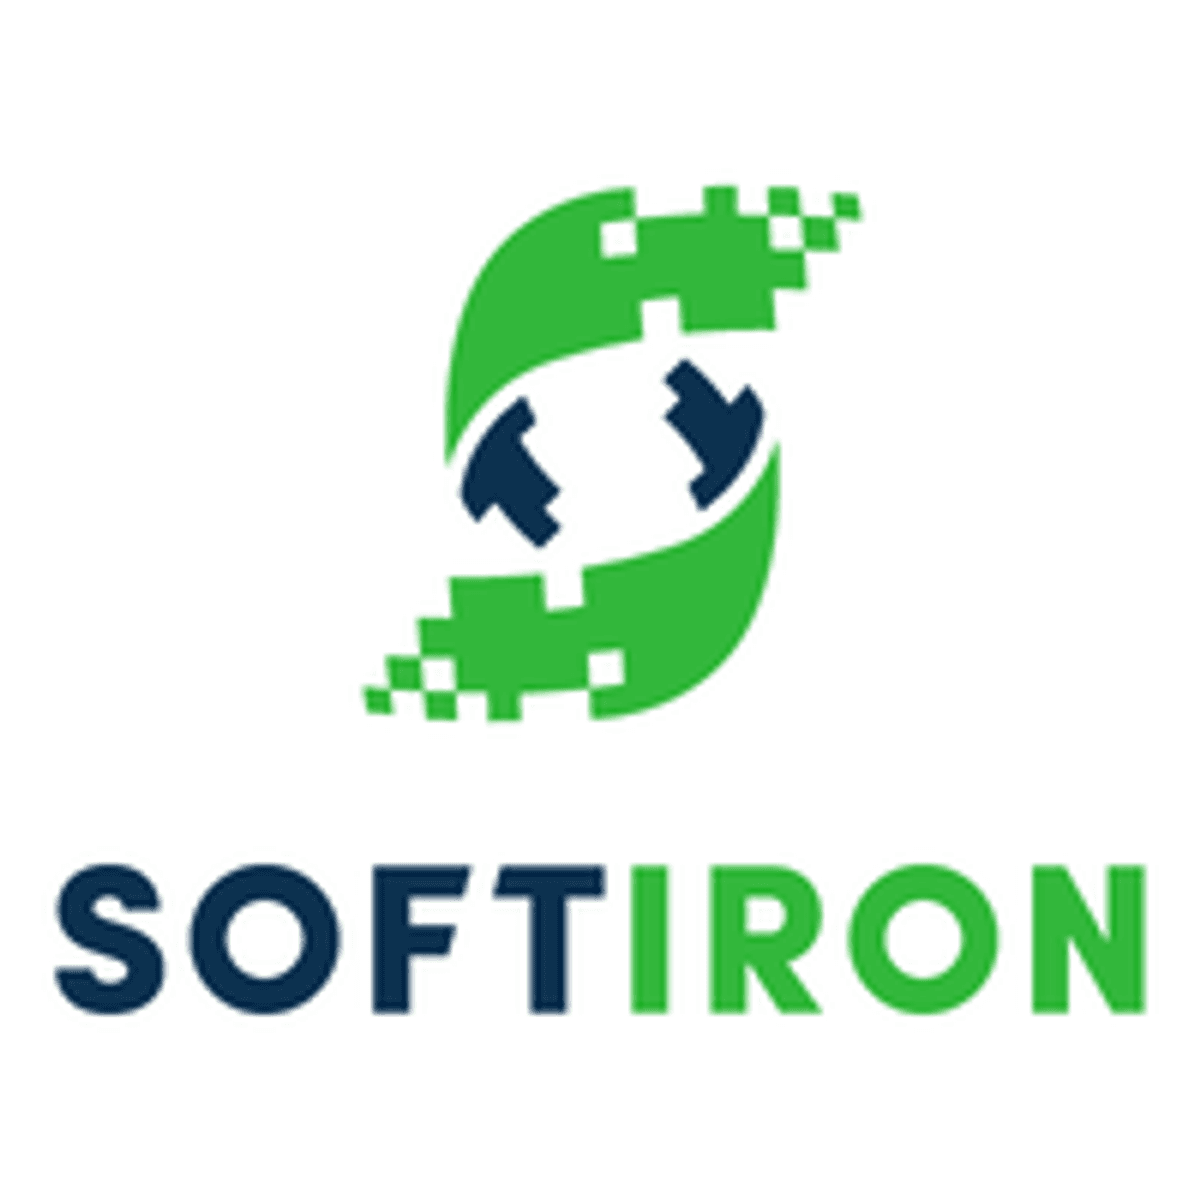 Storage specialist SoftIron krijgt kapitaalinjectie image